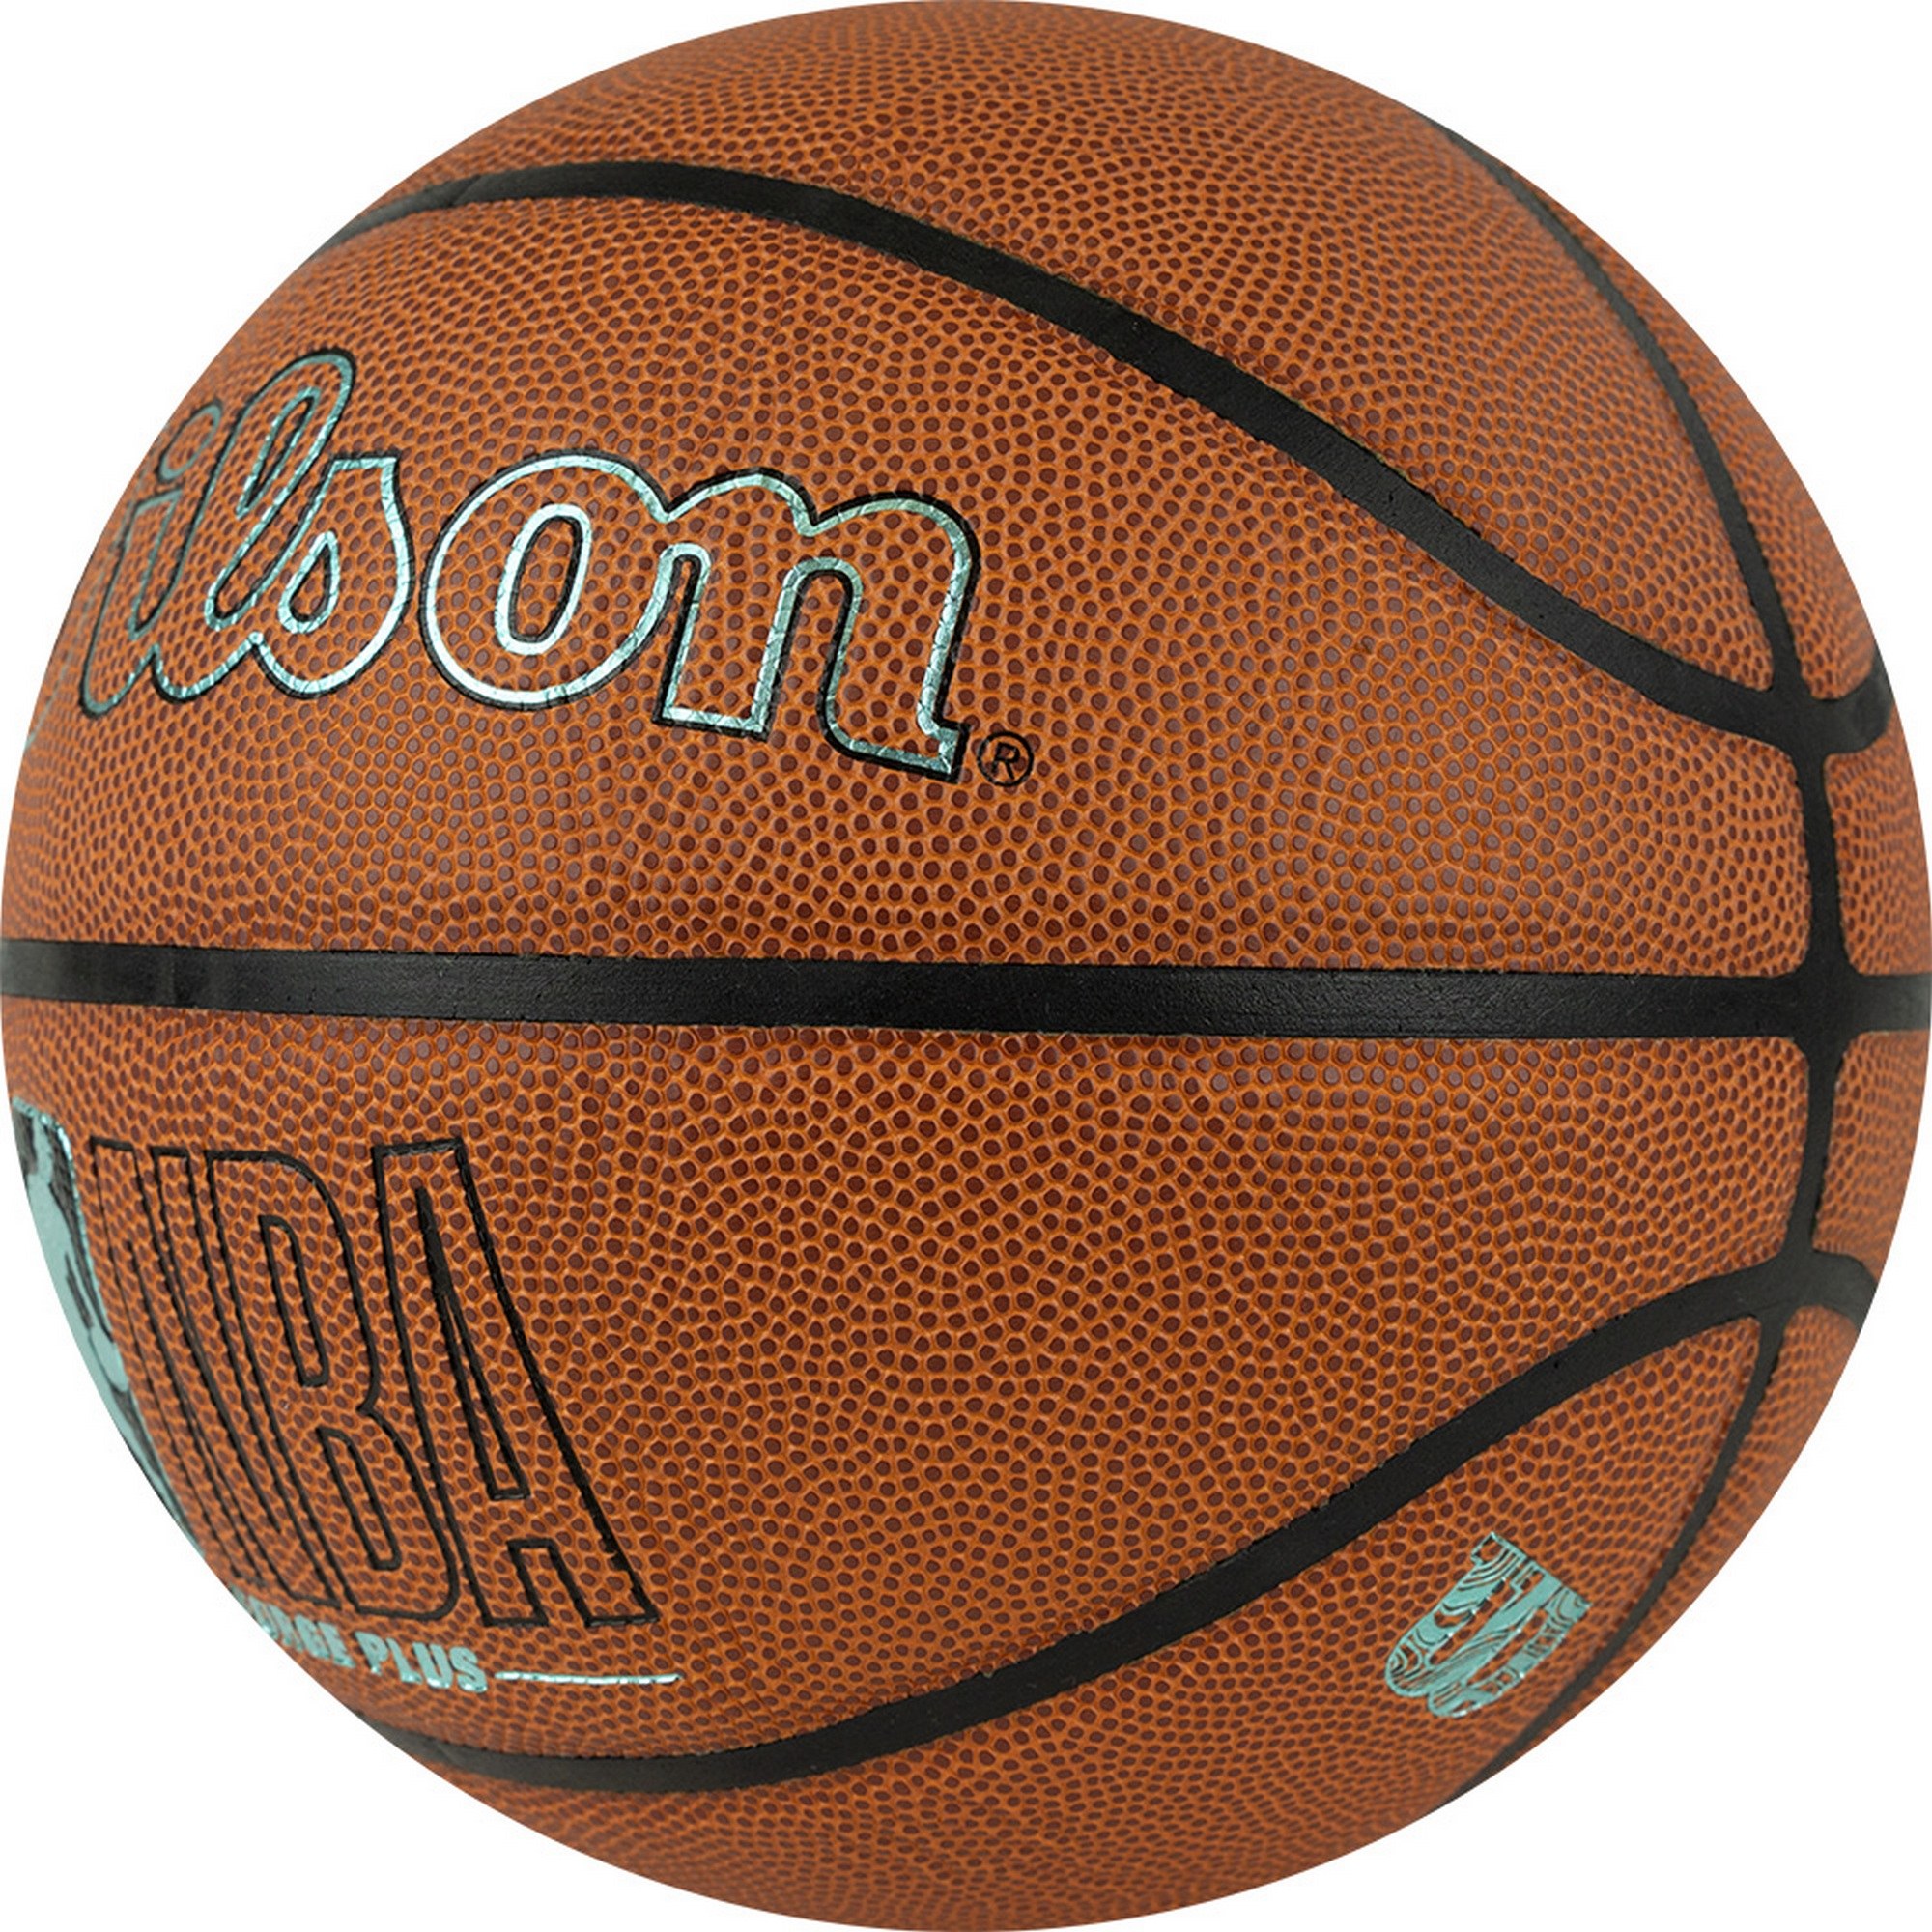 Мяч баскетбольный Wilson NBA Forge Plus Eco BSKT WZ2010901XB6 р.6 2000_2000